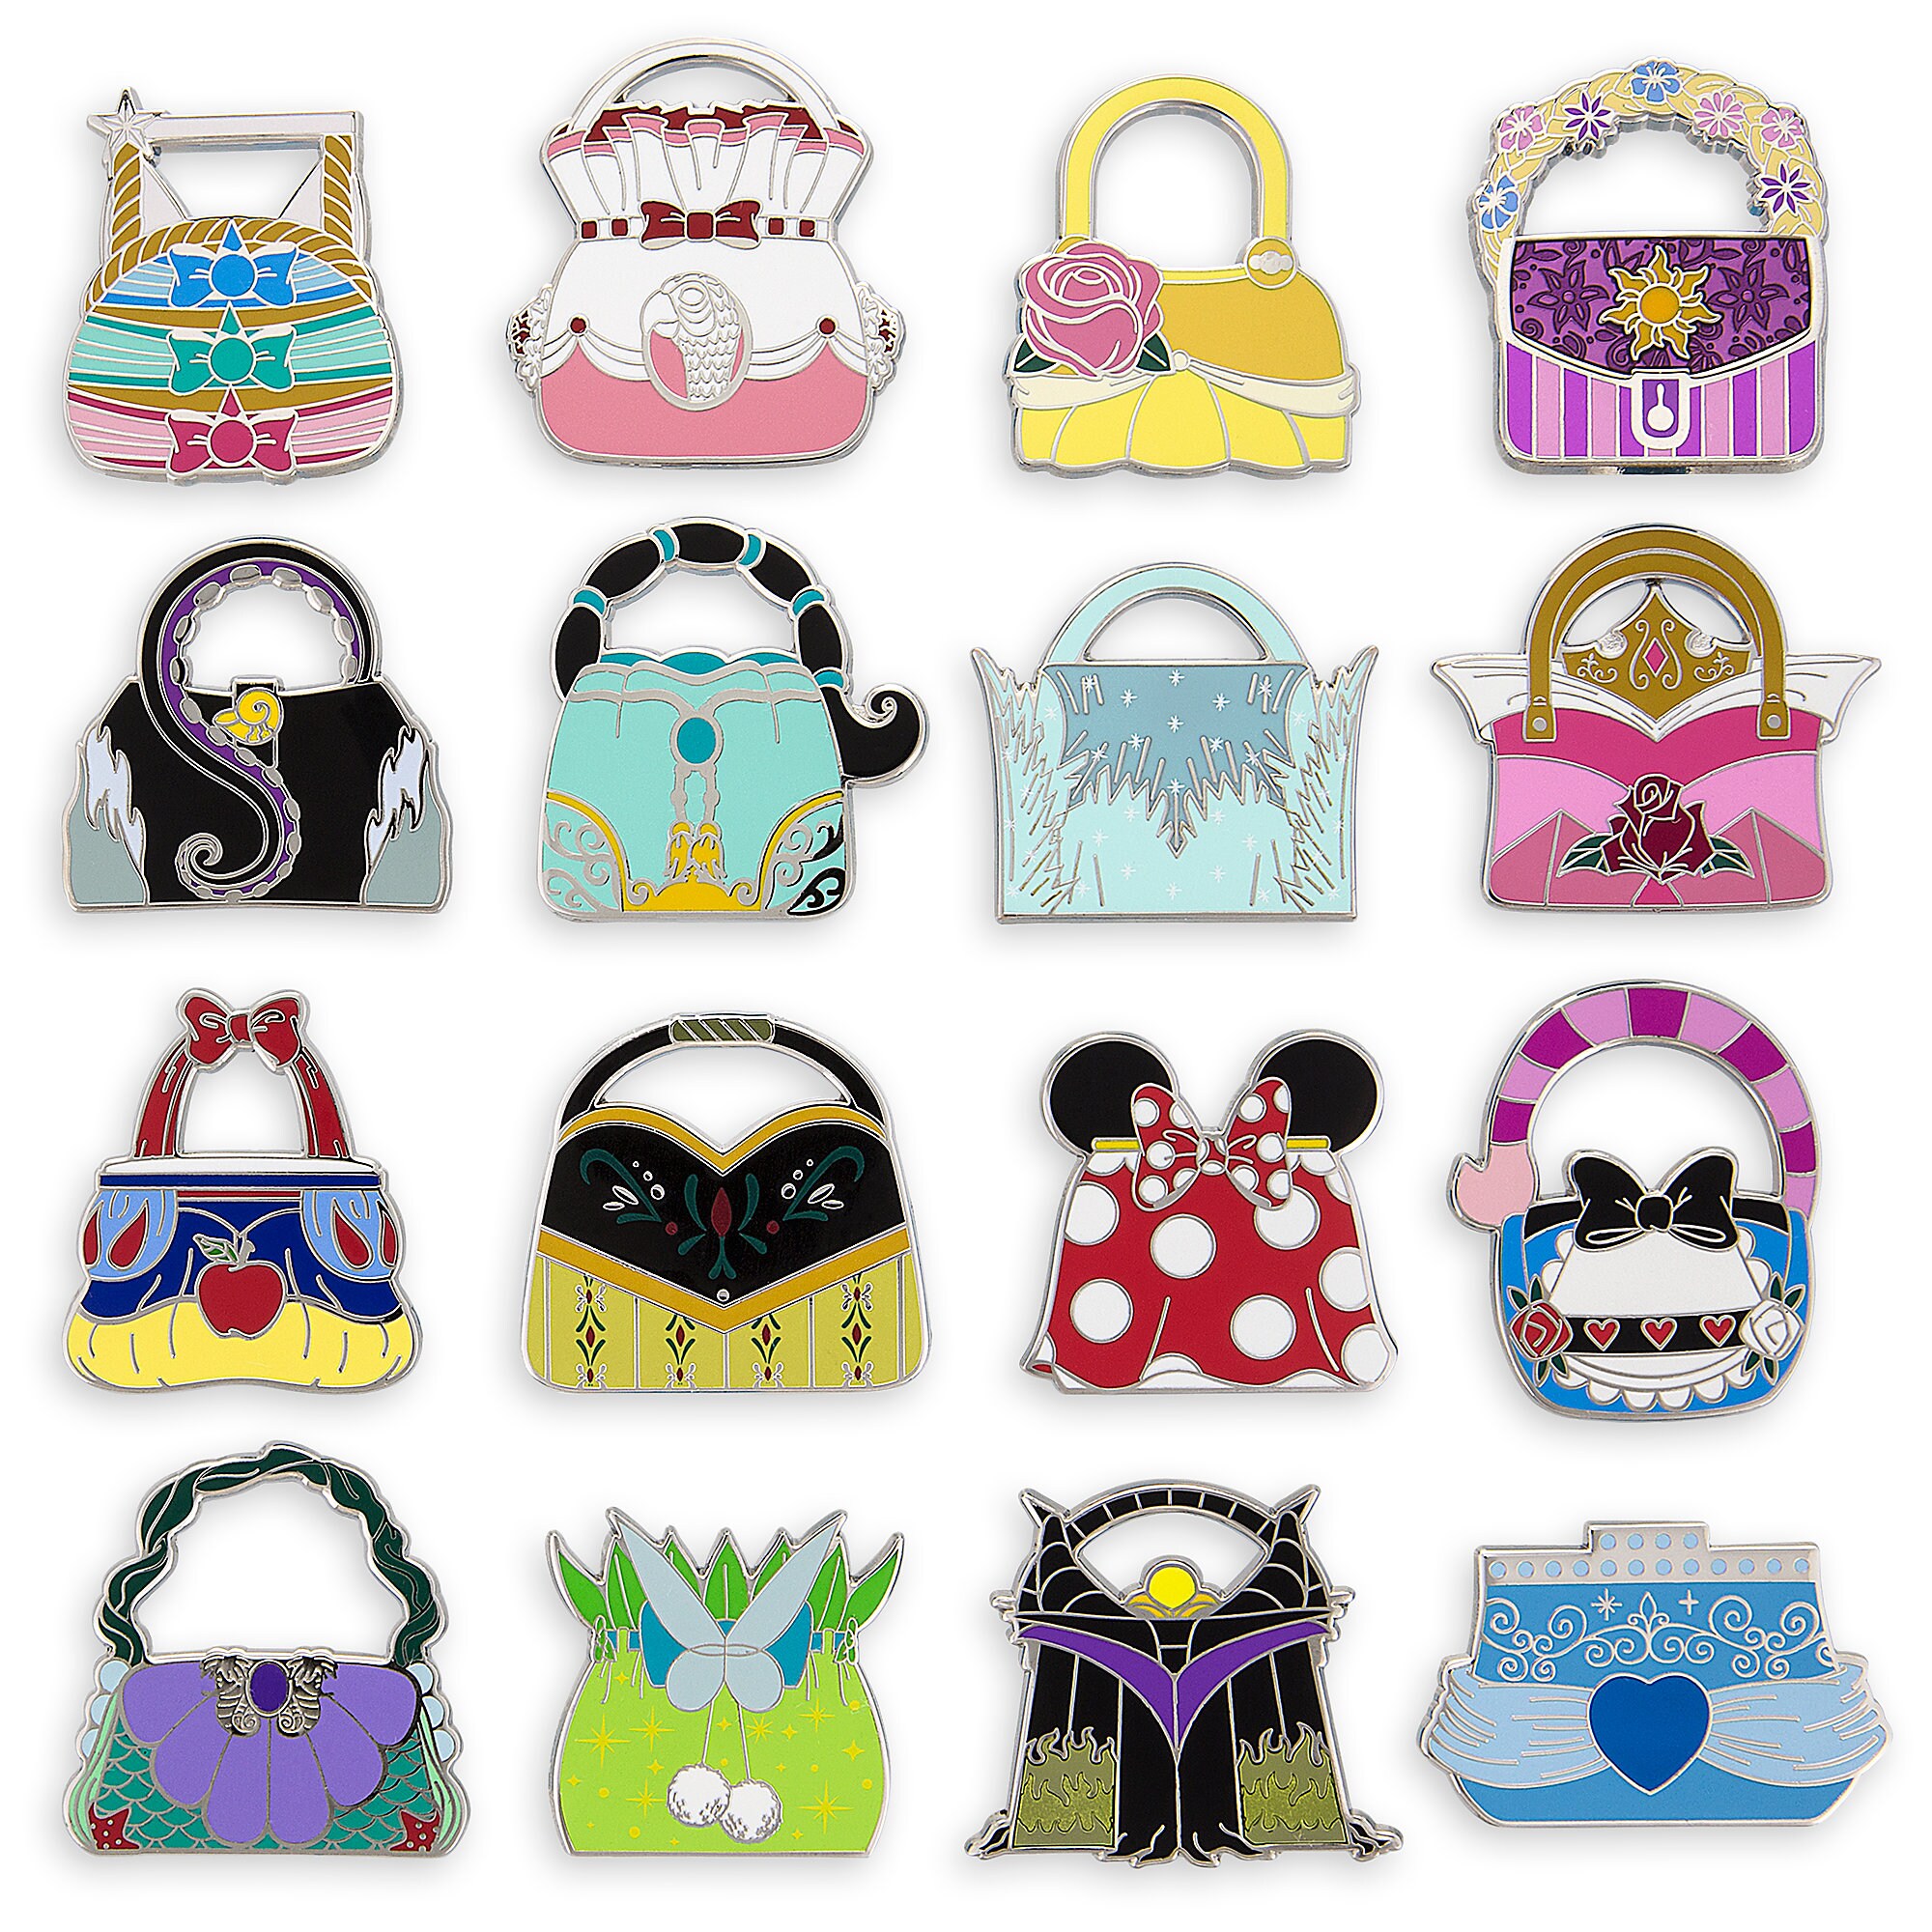 Disney Handbag Mystery Pin Pack available online for